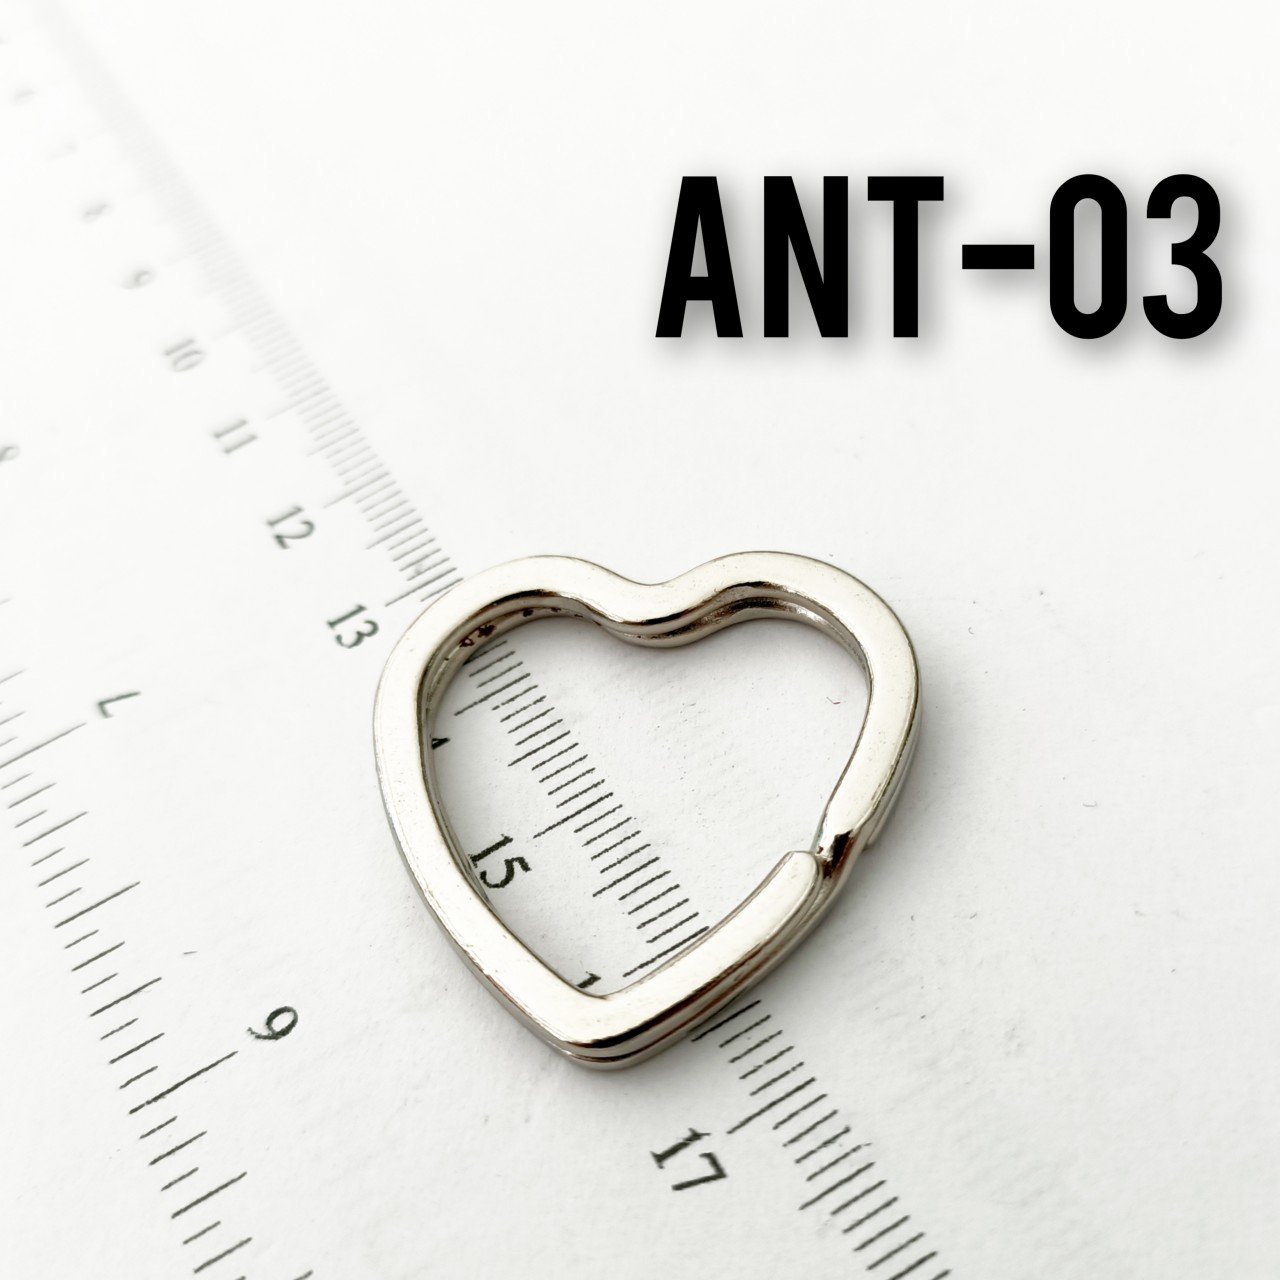 Ant-03 24 Nikel Kaplama Kalp Anahtarlık Halkası 31 mm